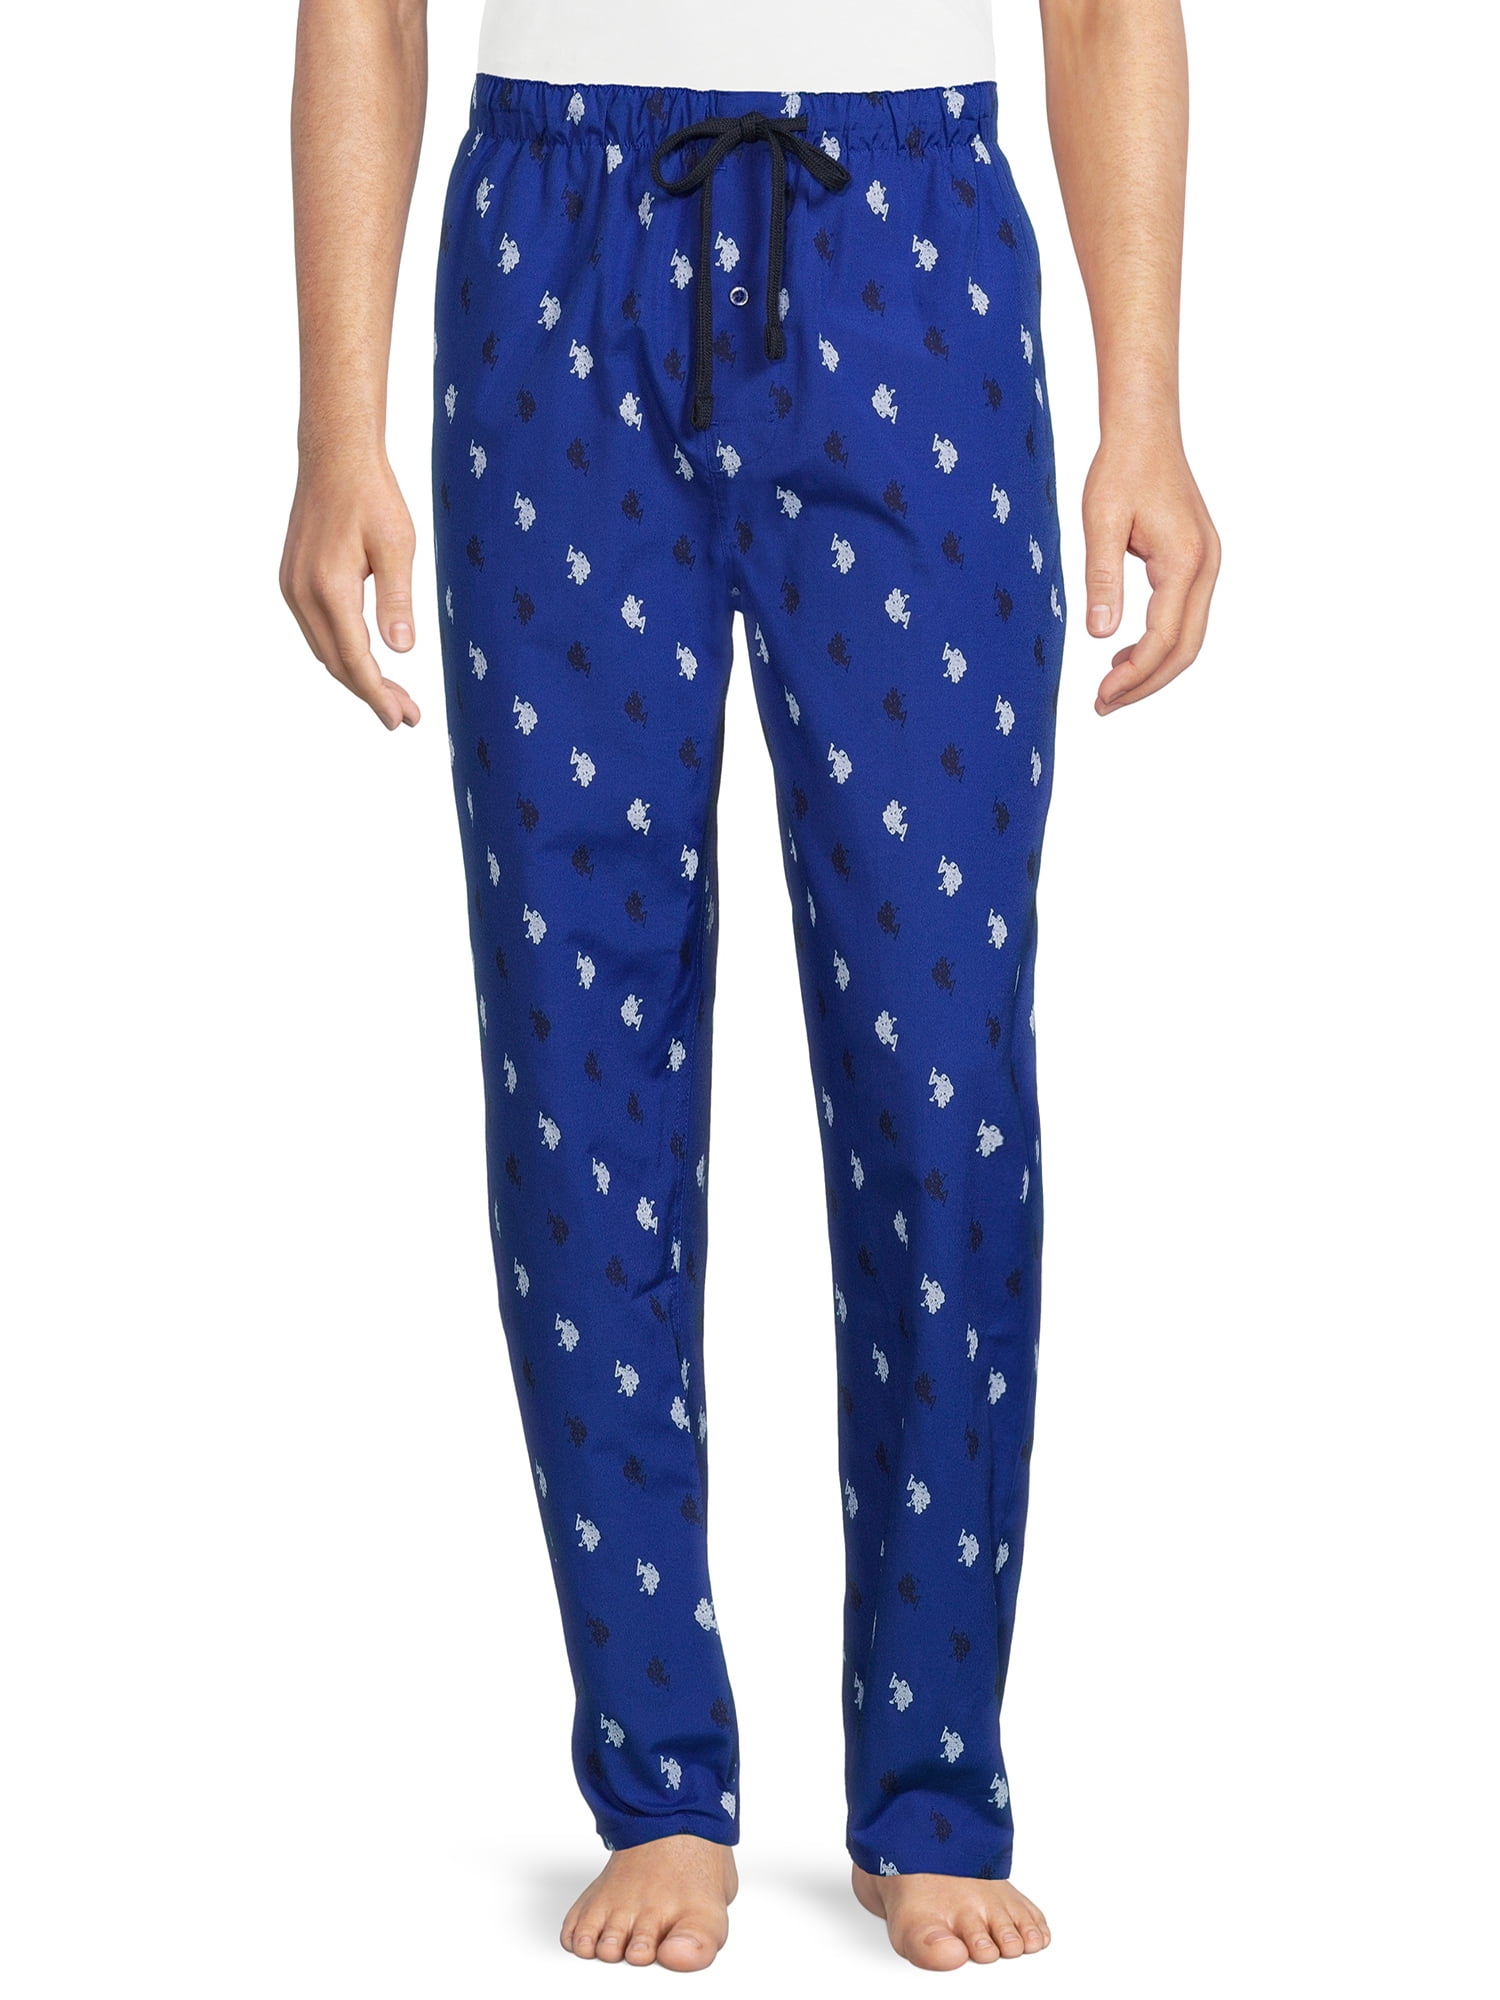 . Polo Assn. Men's Logo Woven Lounge Pants, Sizes S-XL, Mens Pajamas -  